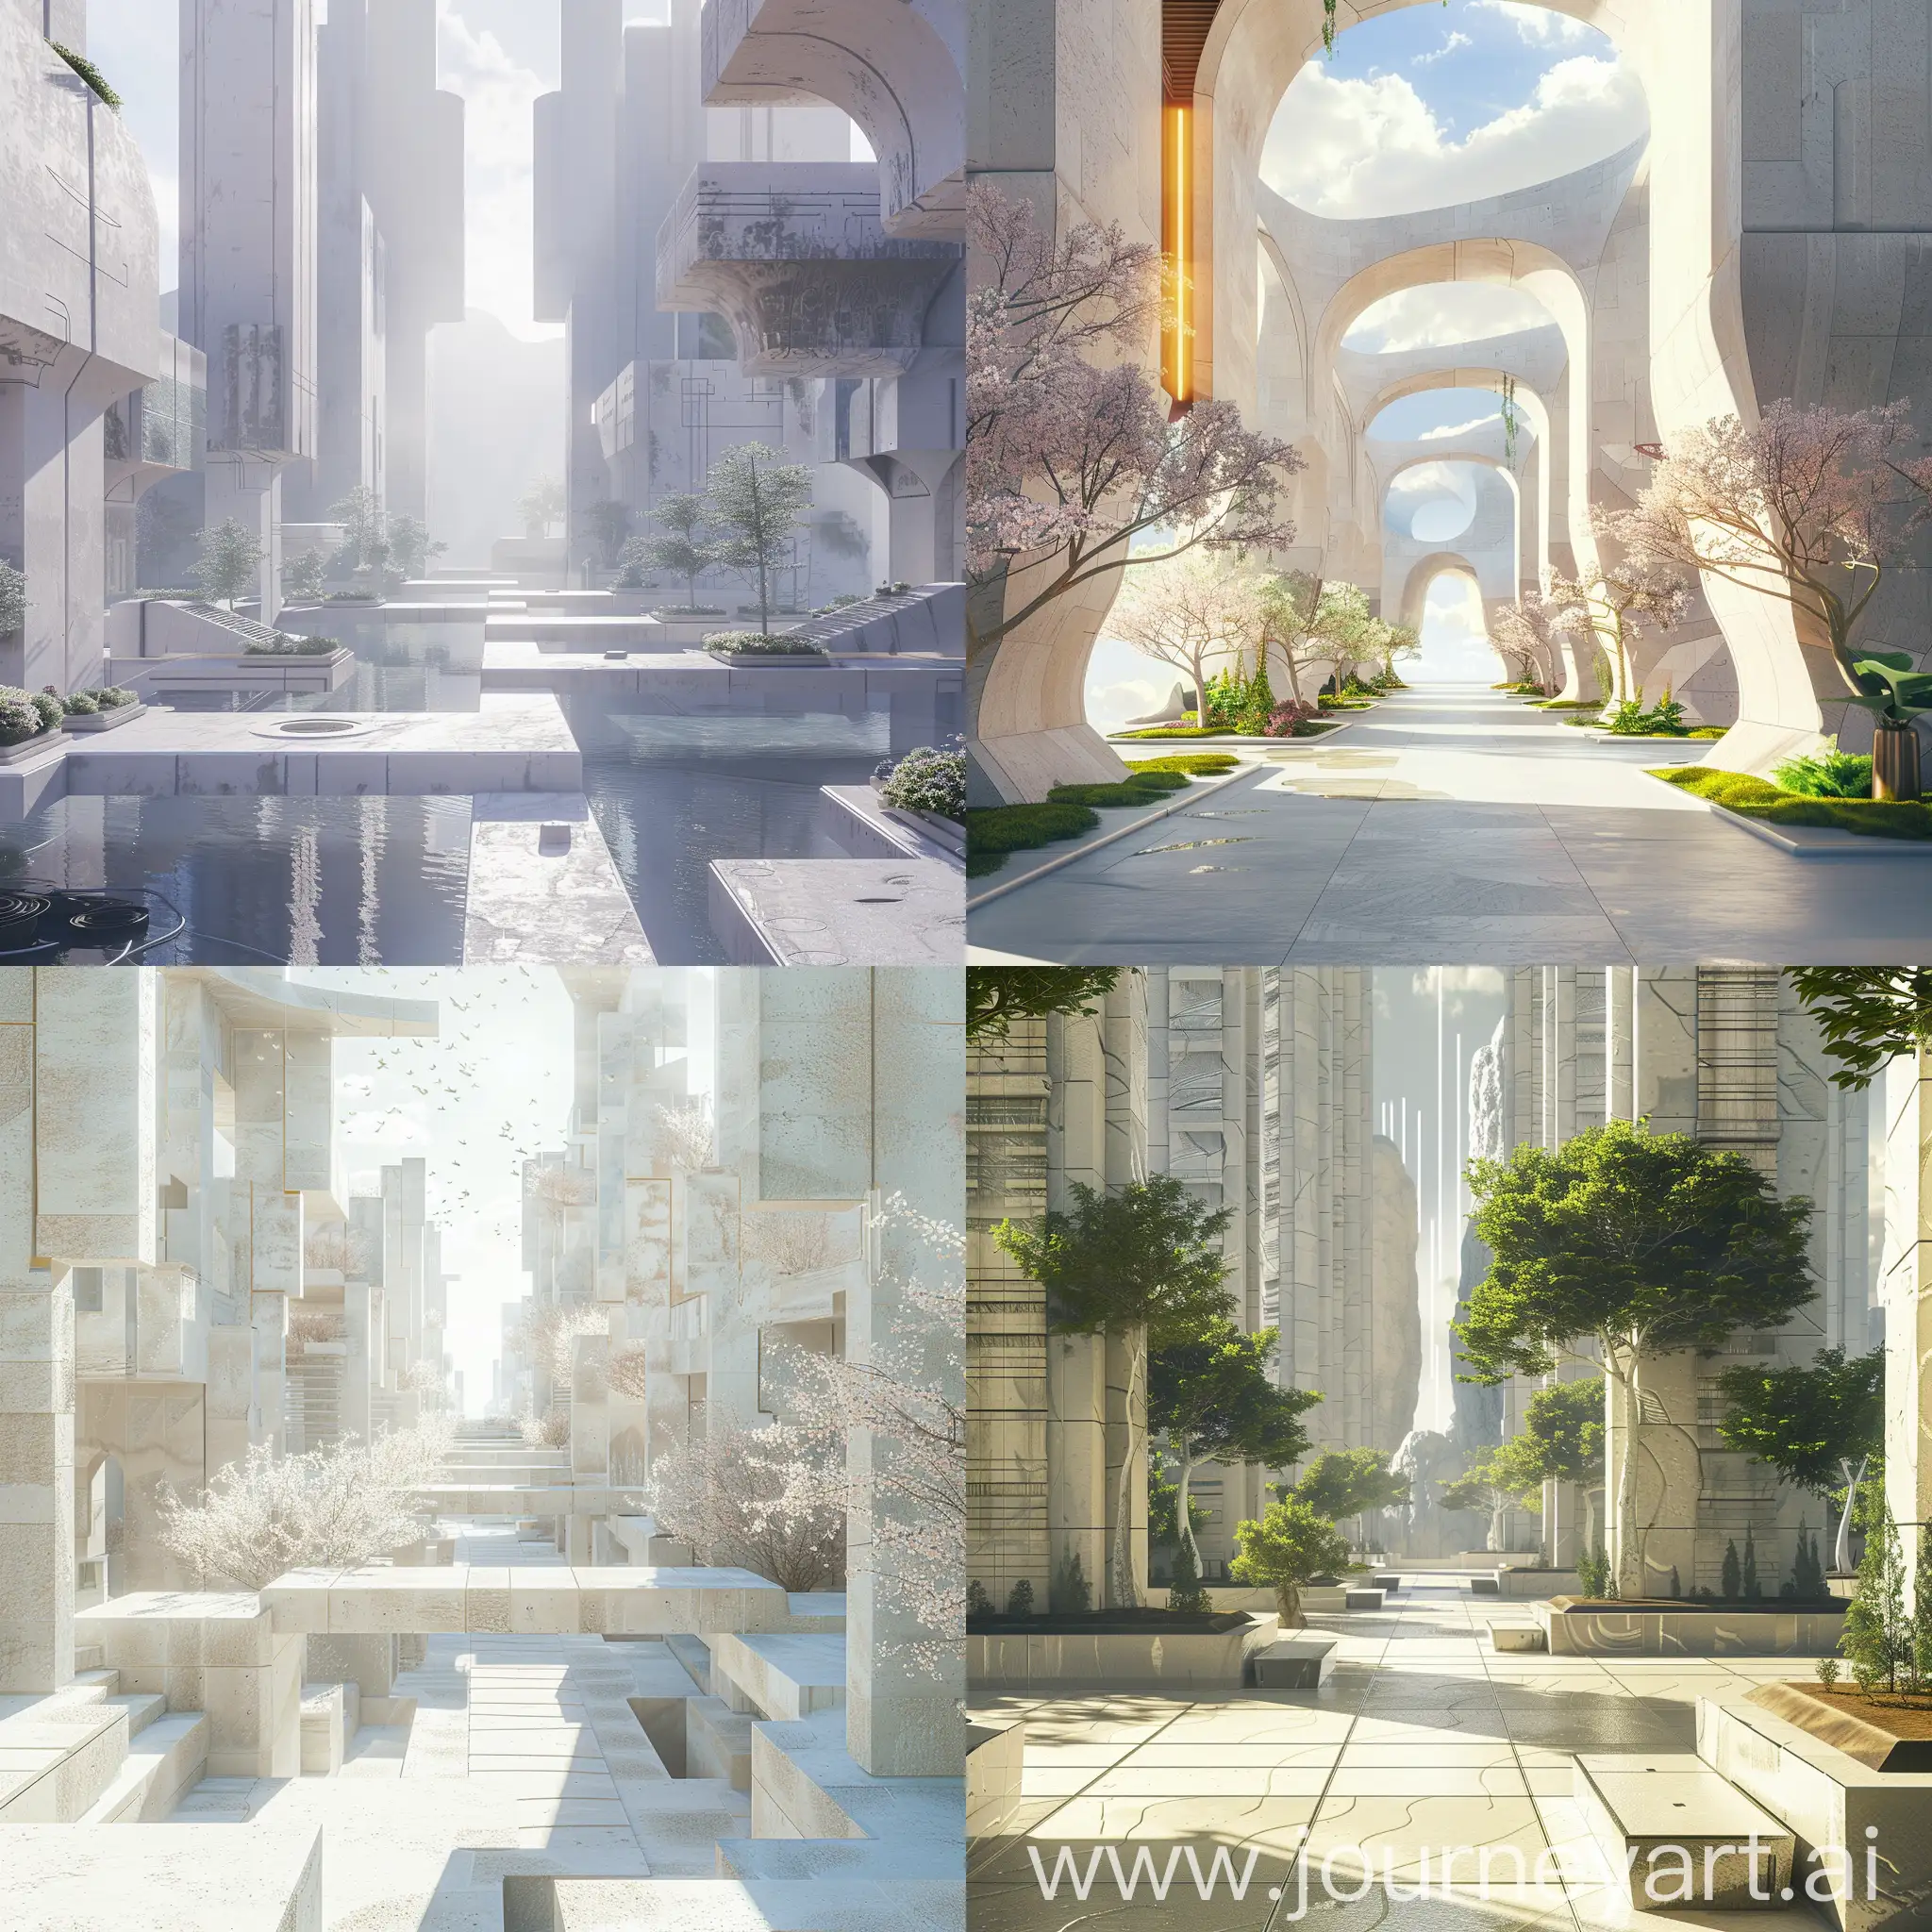 Futuristic-Utopian-Cityscape-Tranquil-Spring-Morning